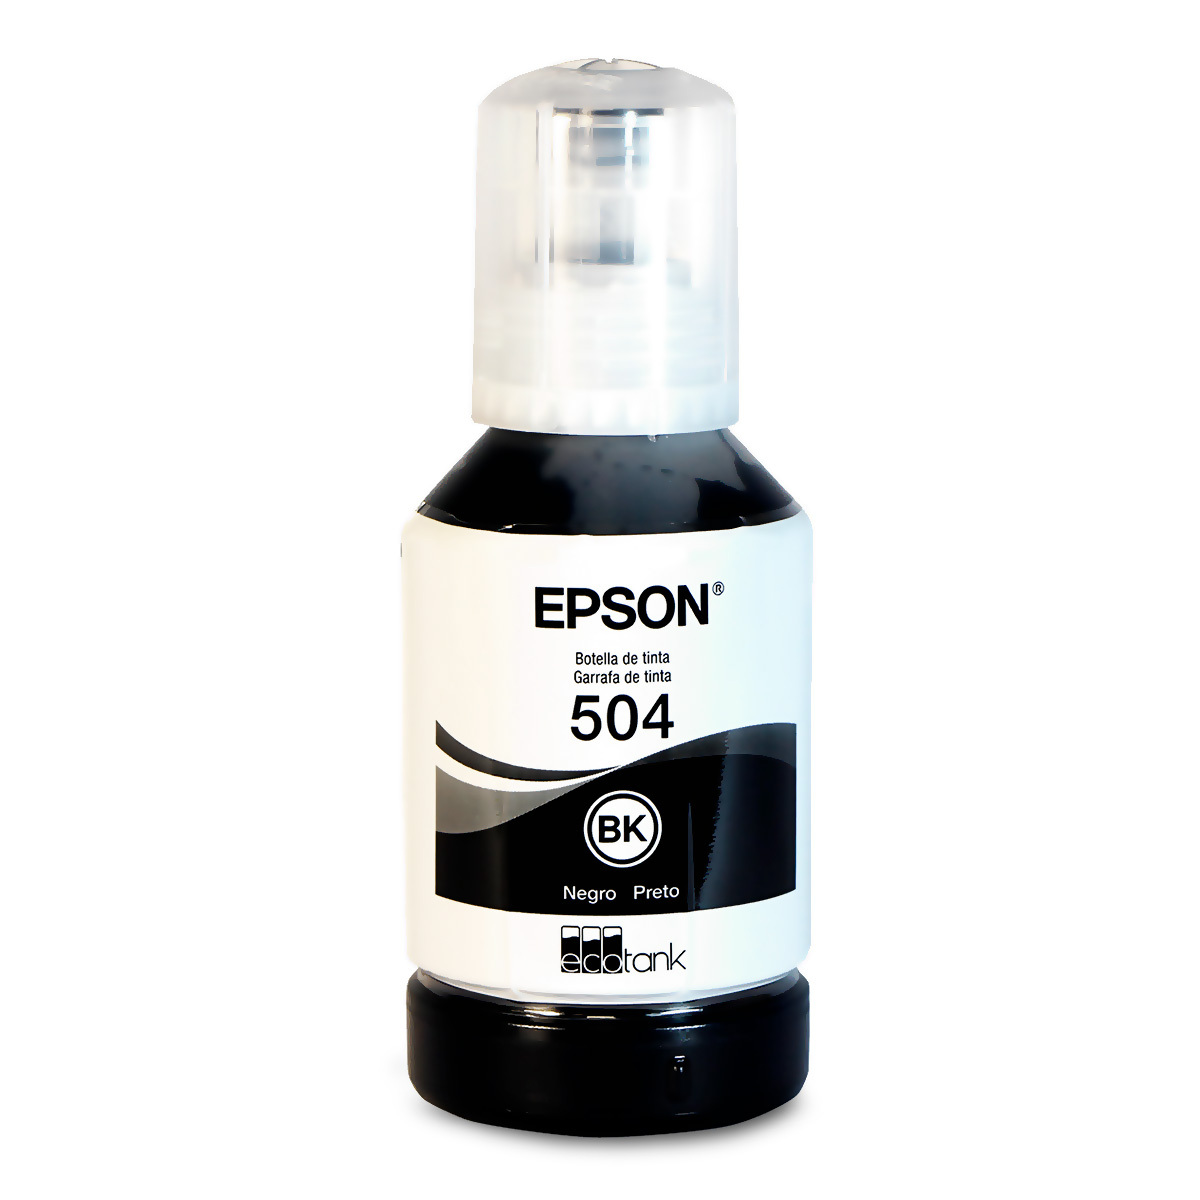 Botella de Tinta Epson T504 / T504120 AL / Negro / 7500 páginas / EcoTank